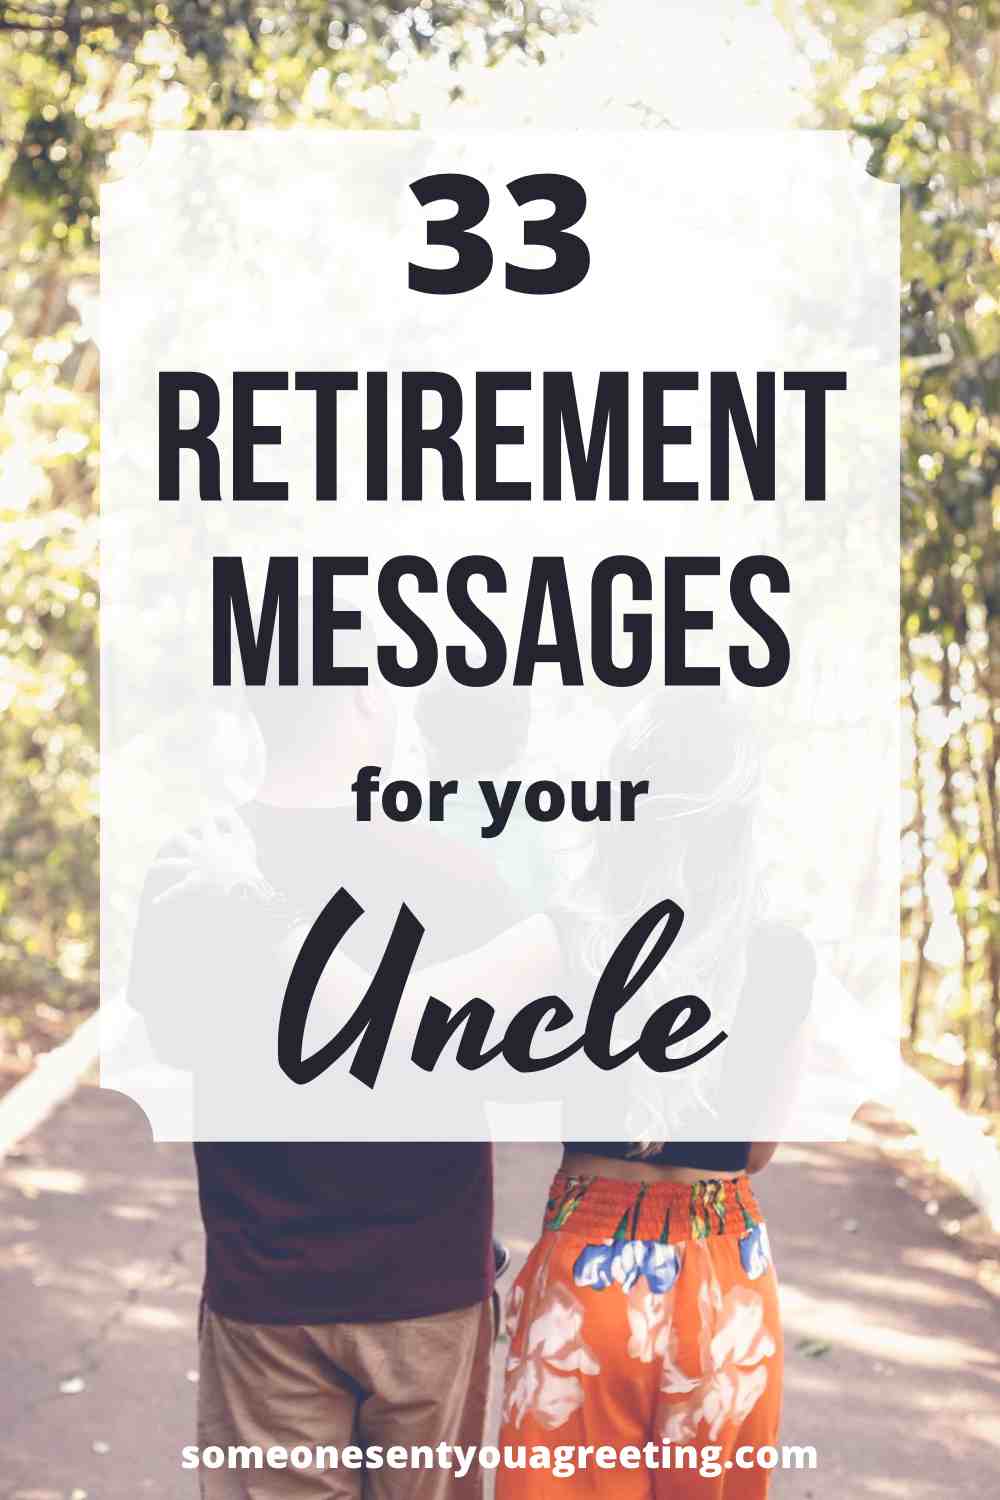 Retirement messages for uncle